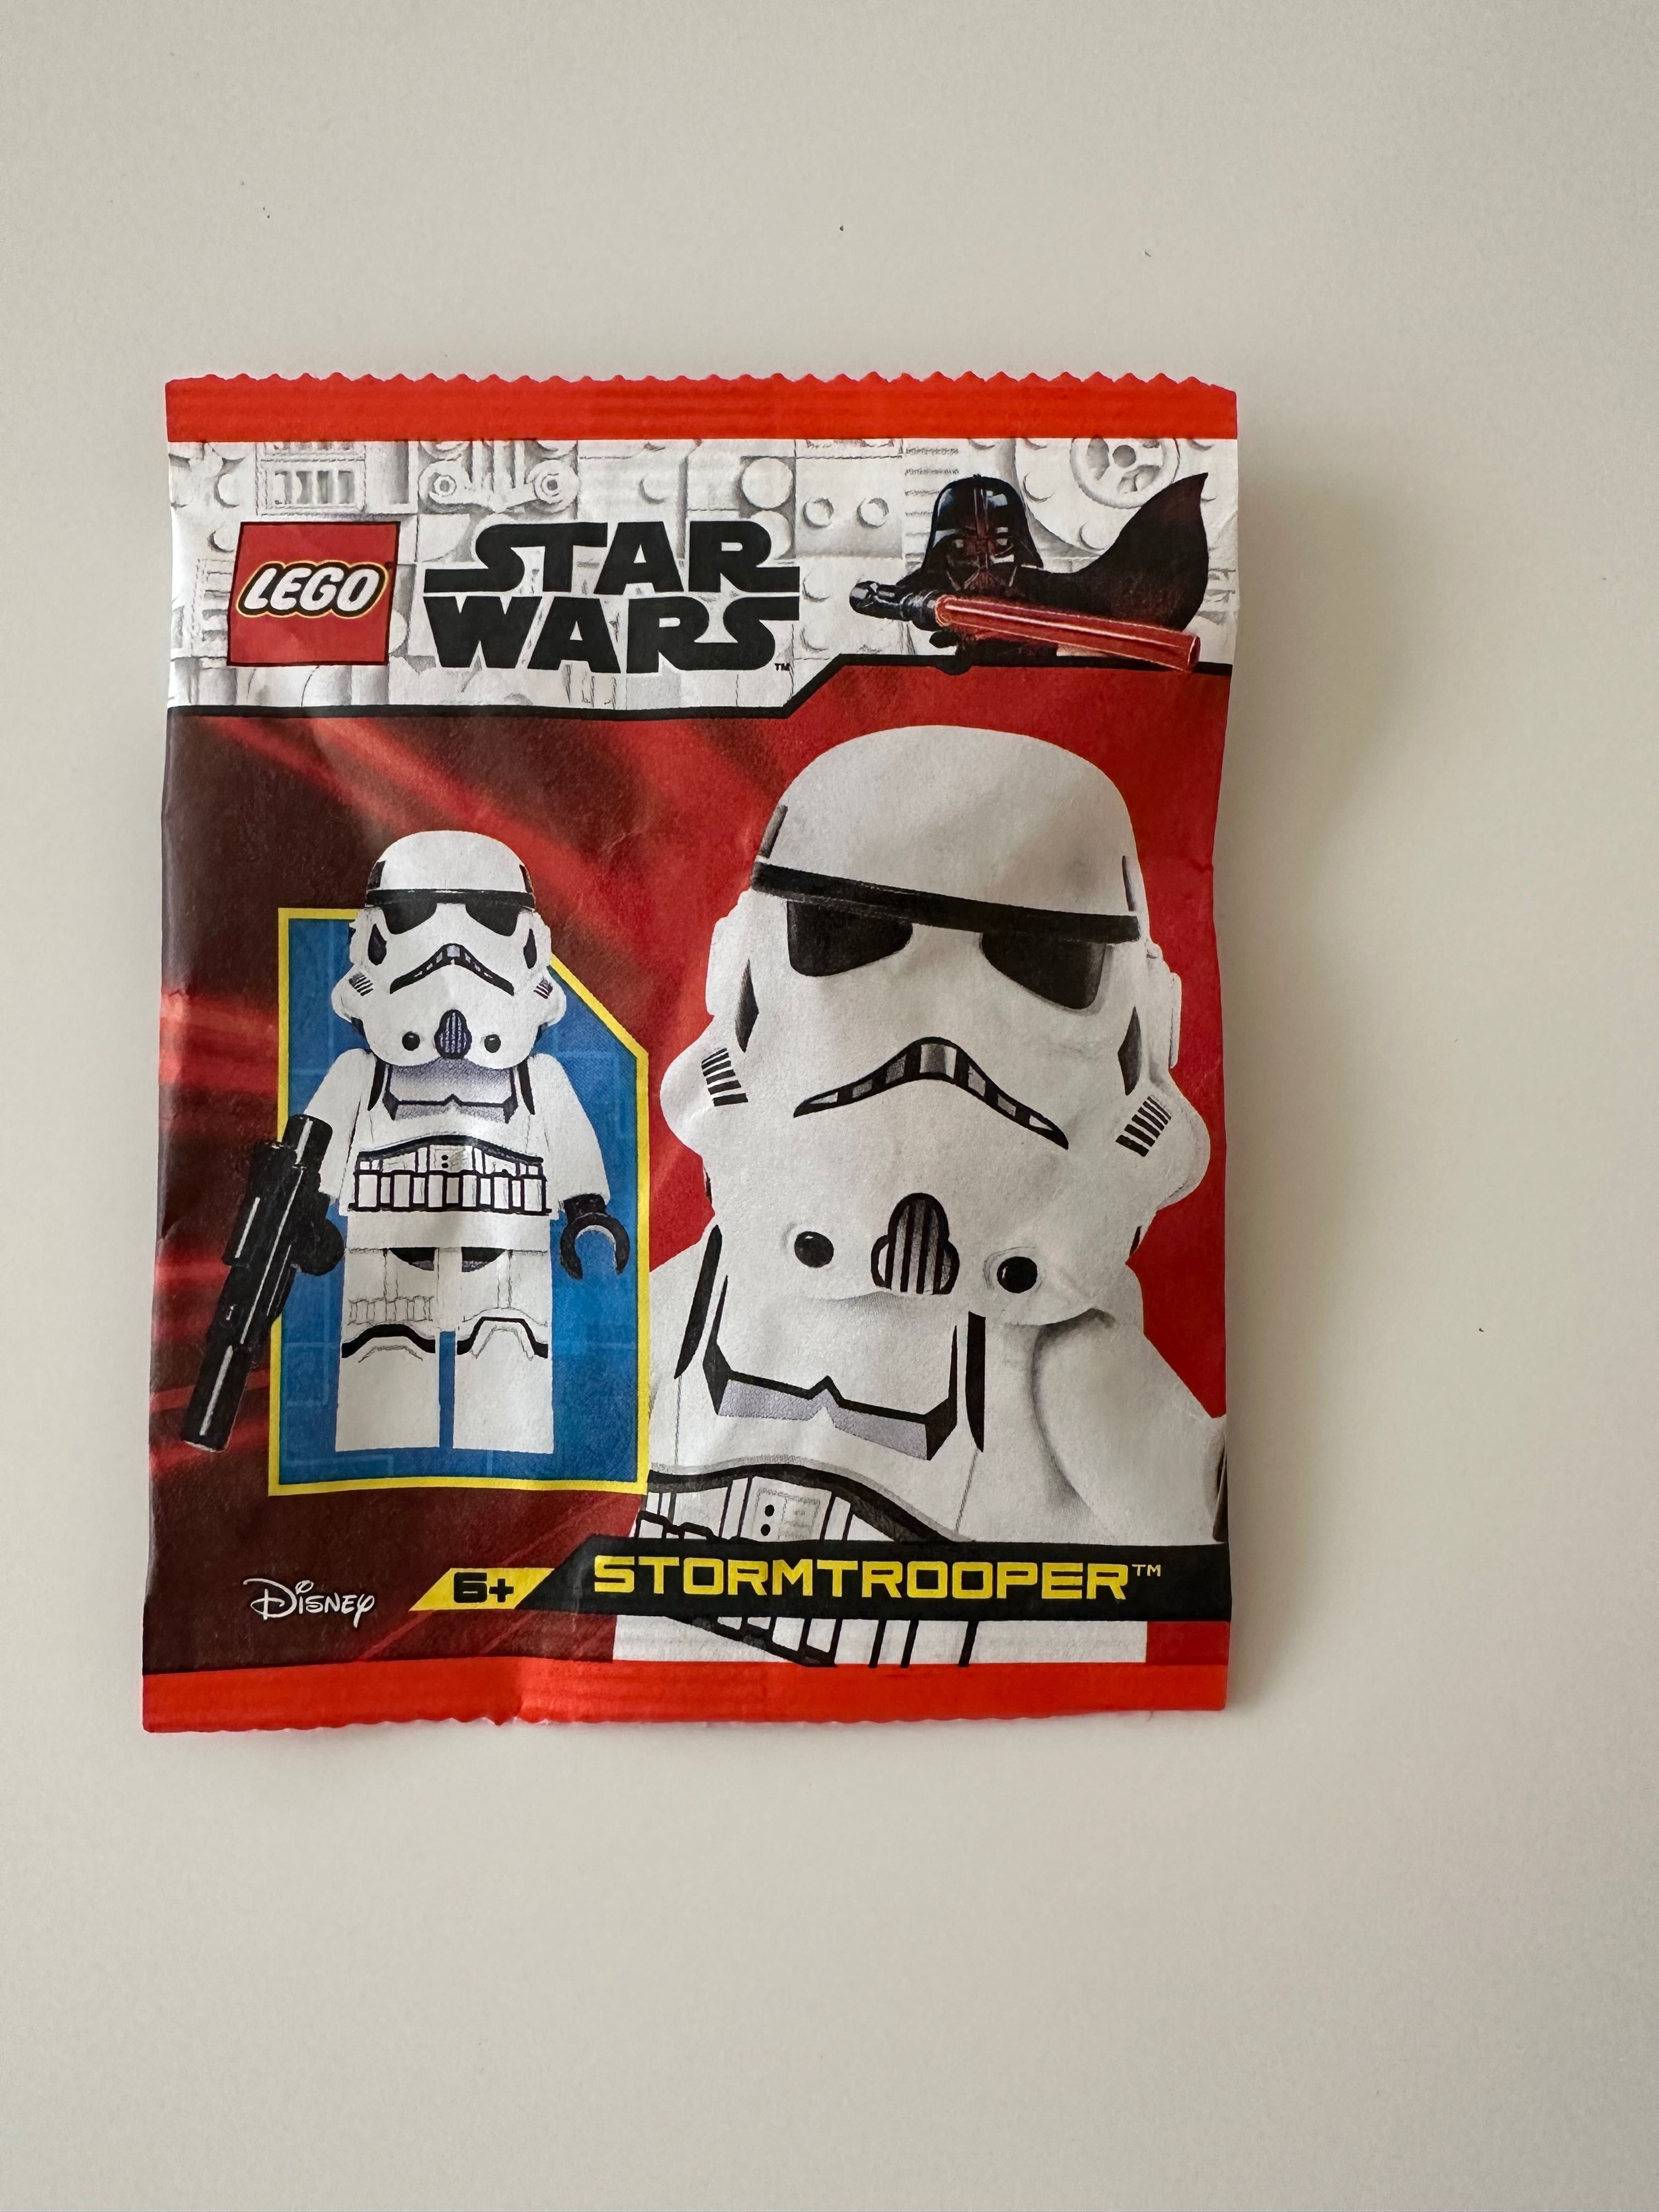 Nowa w opakowaniu figurka Lego Star Wars StormTropper